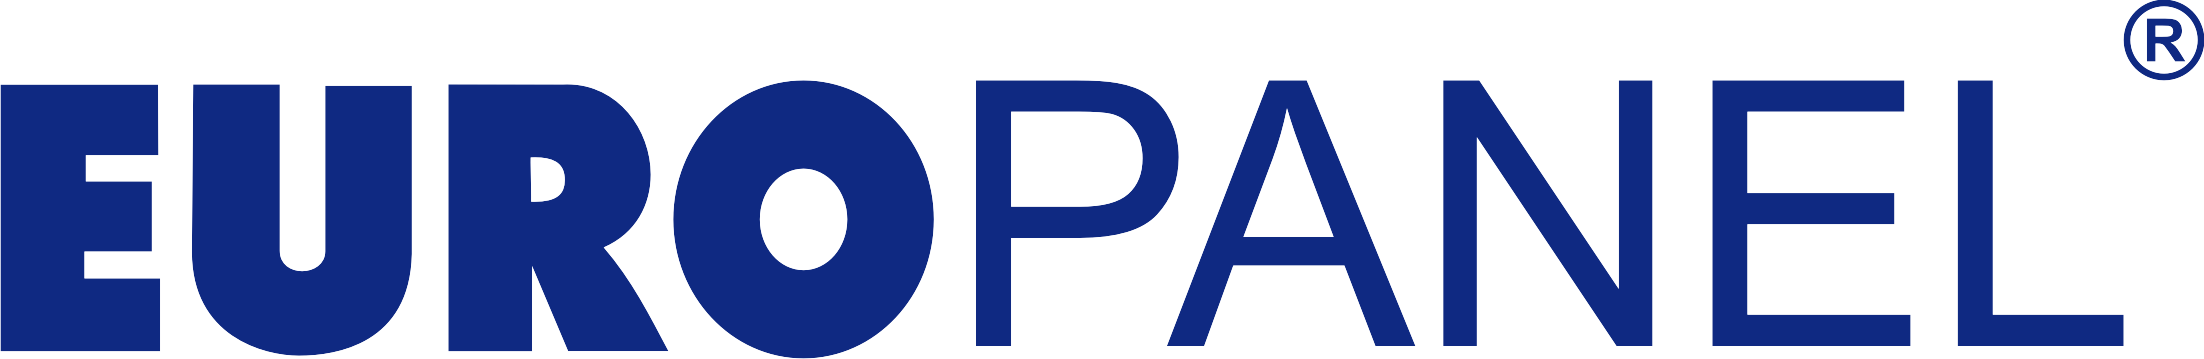 logo-europanel-modre.png, 74kB